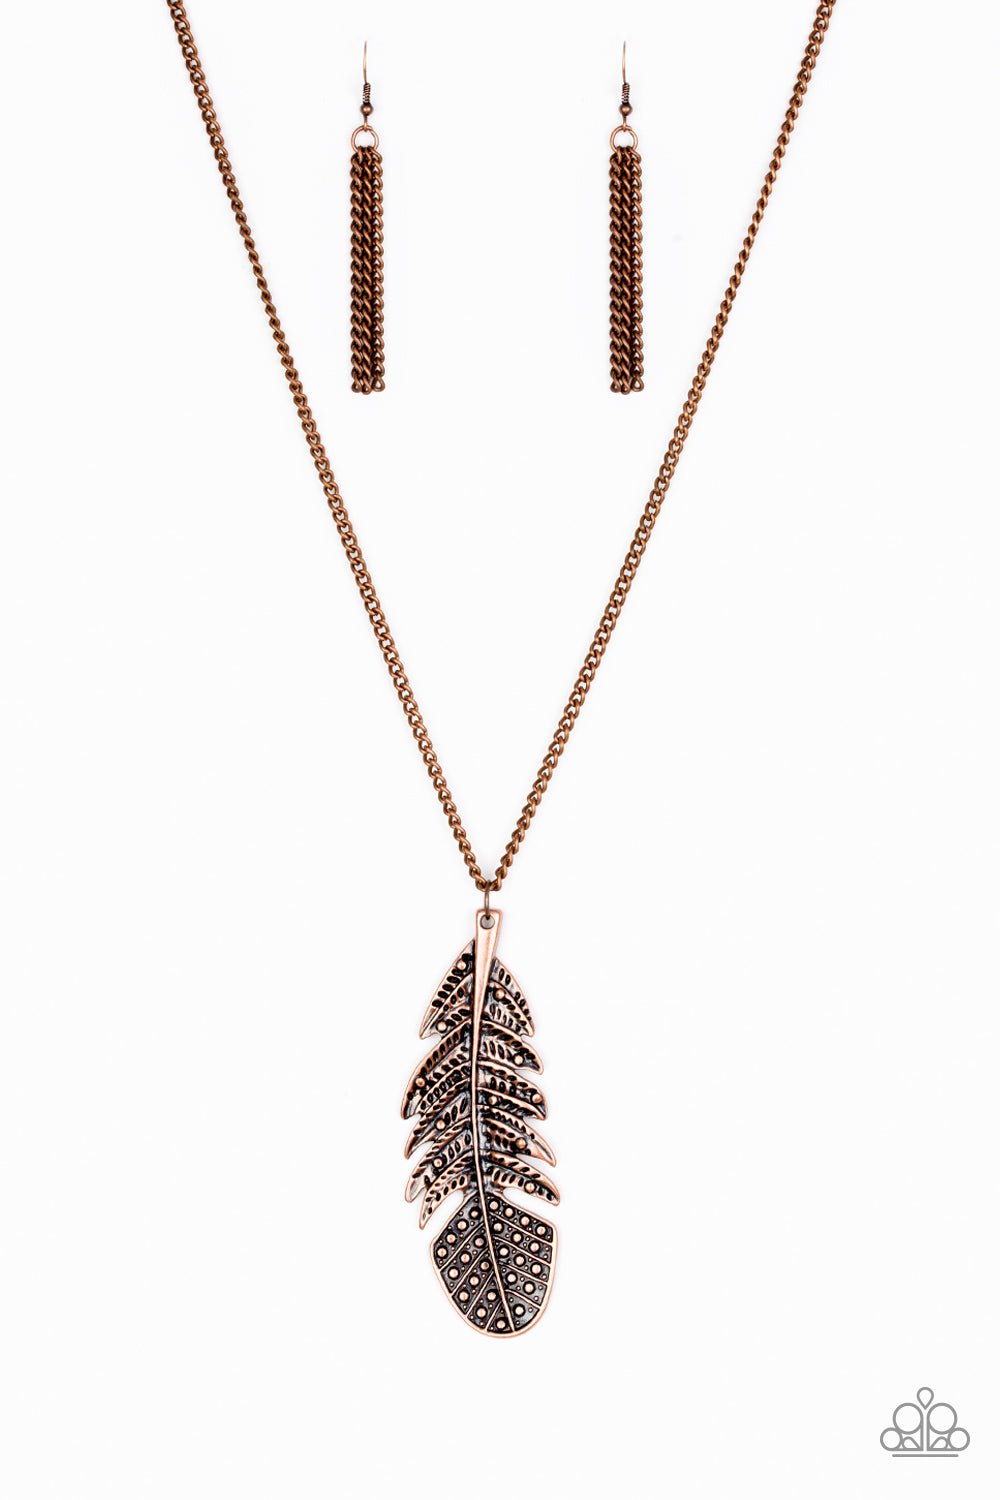 Free Bird - Copper - Necklace - Paparazzi Accessories